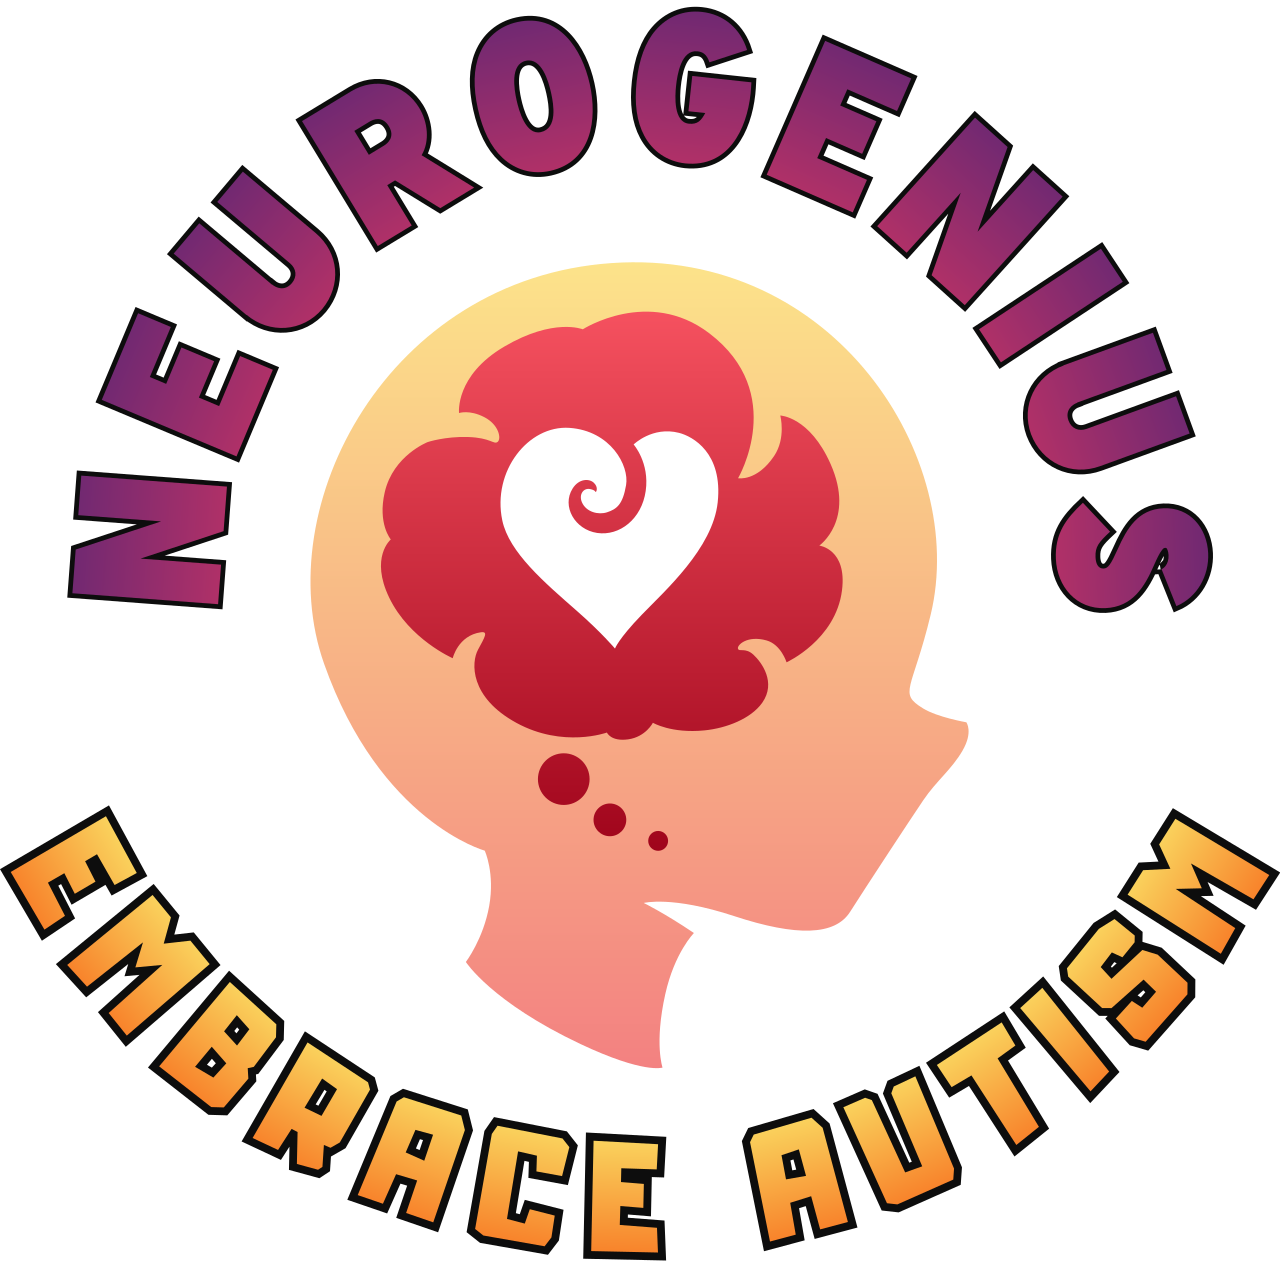 NEUROGENIUS's logo